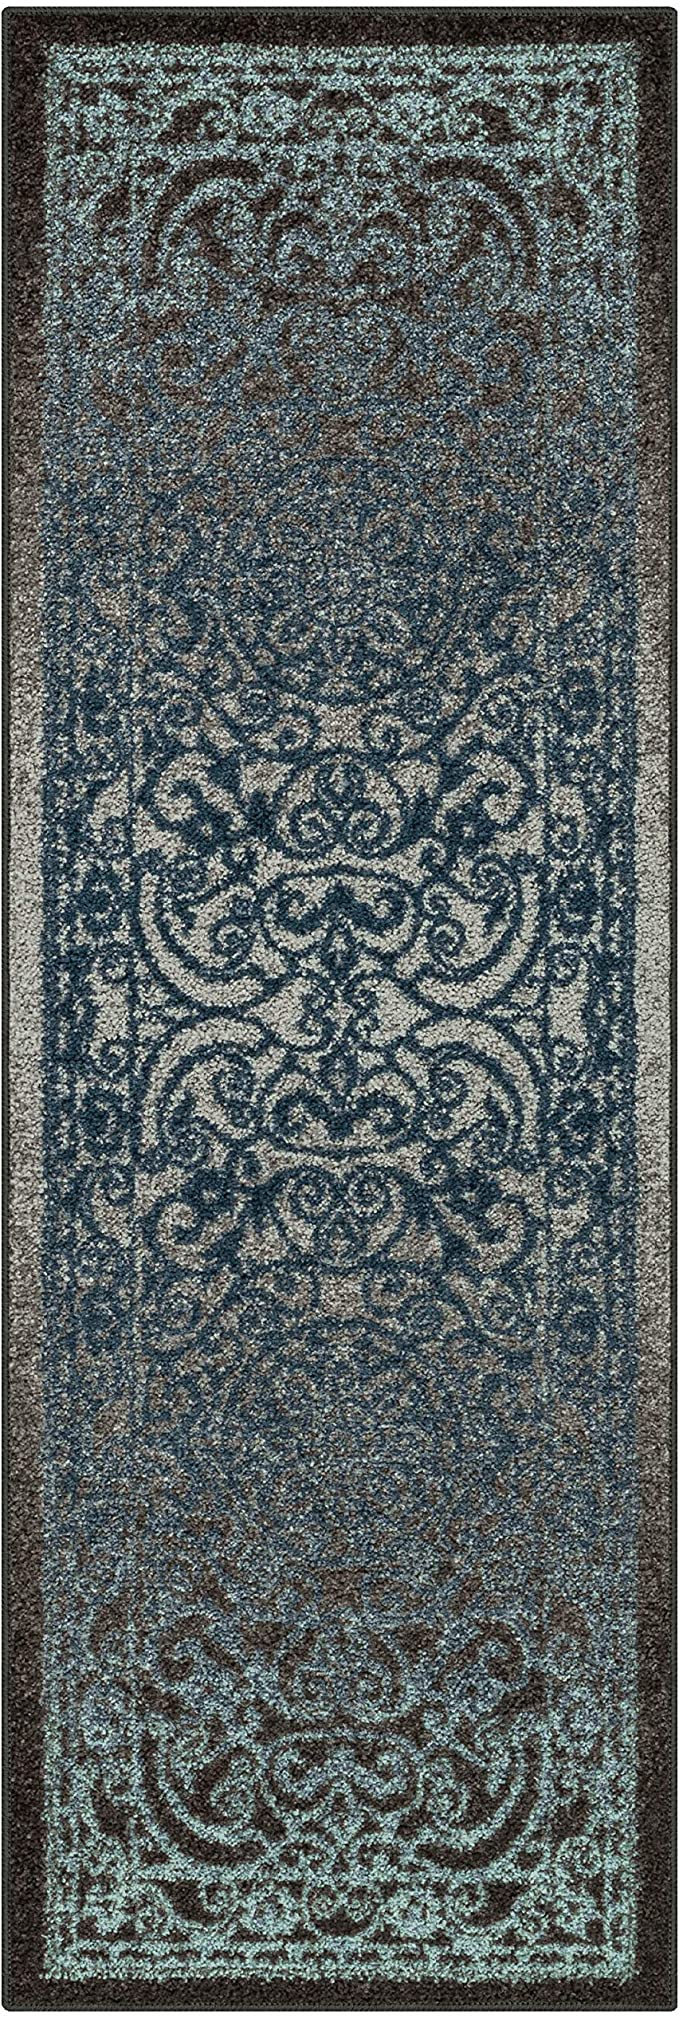 Maples Rugs Pelham Vintage Runner Rug Non Slip Hallway Entry Carpet [Made in USA], 1'8 x 5, Charcoal/Radiant Blue